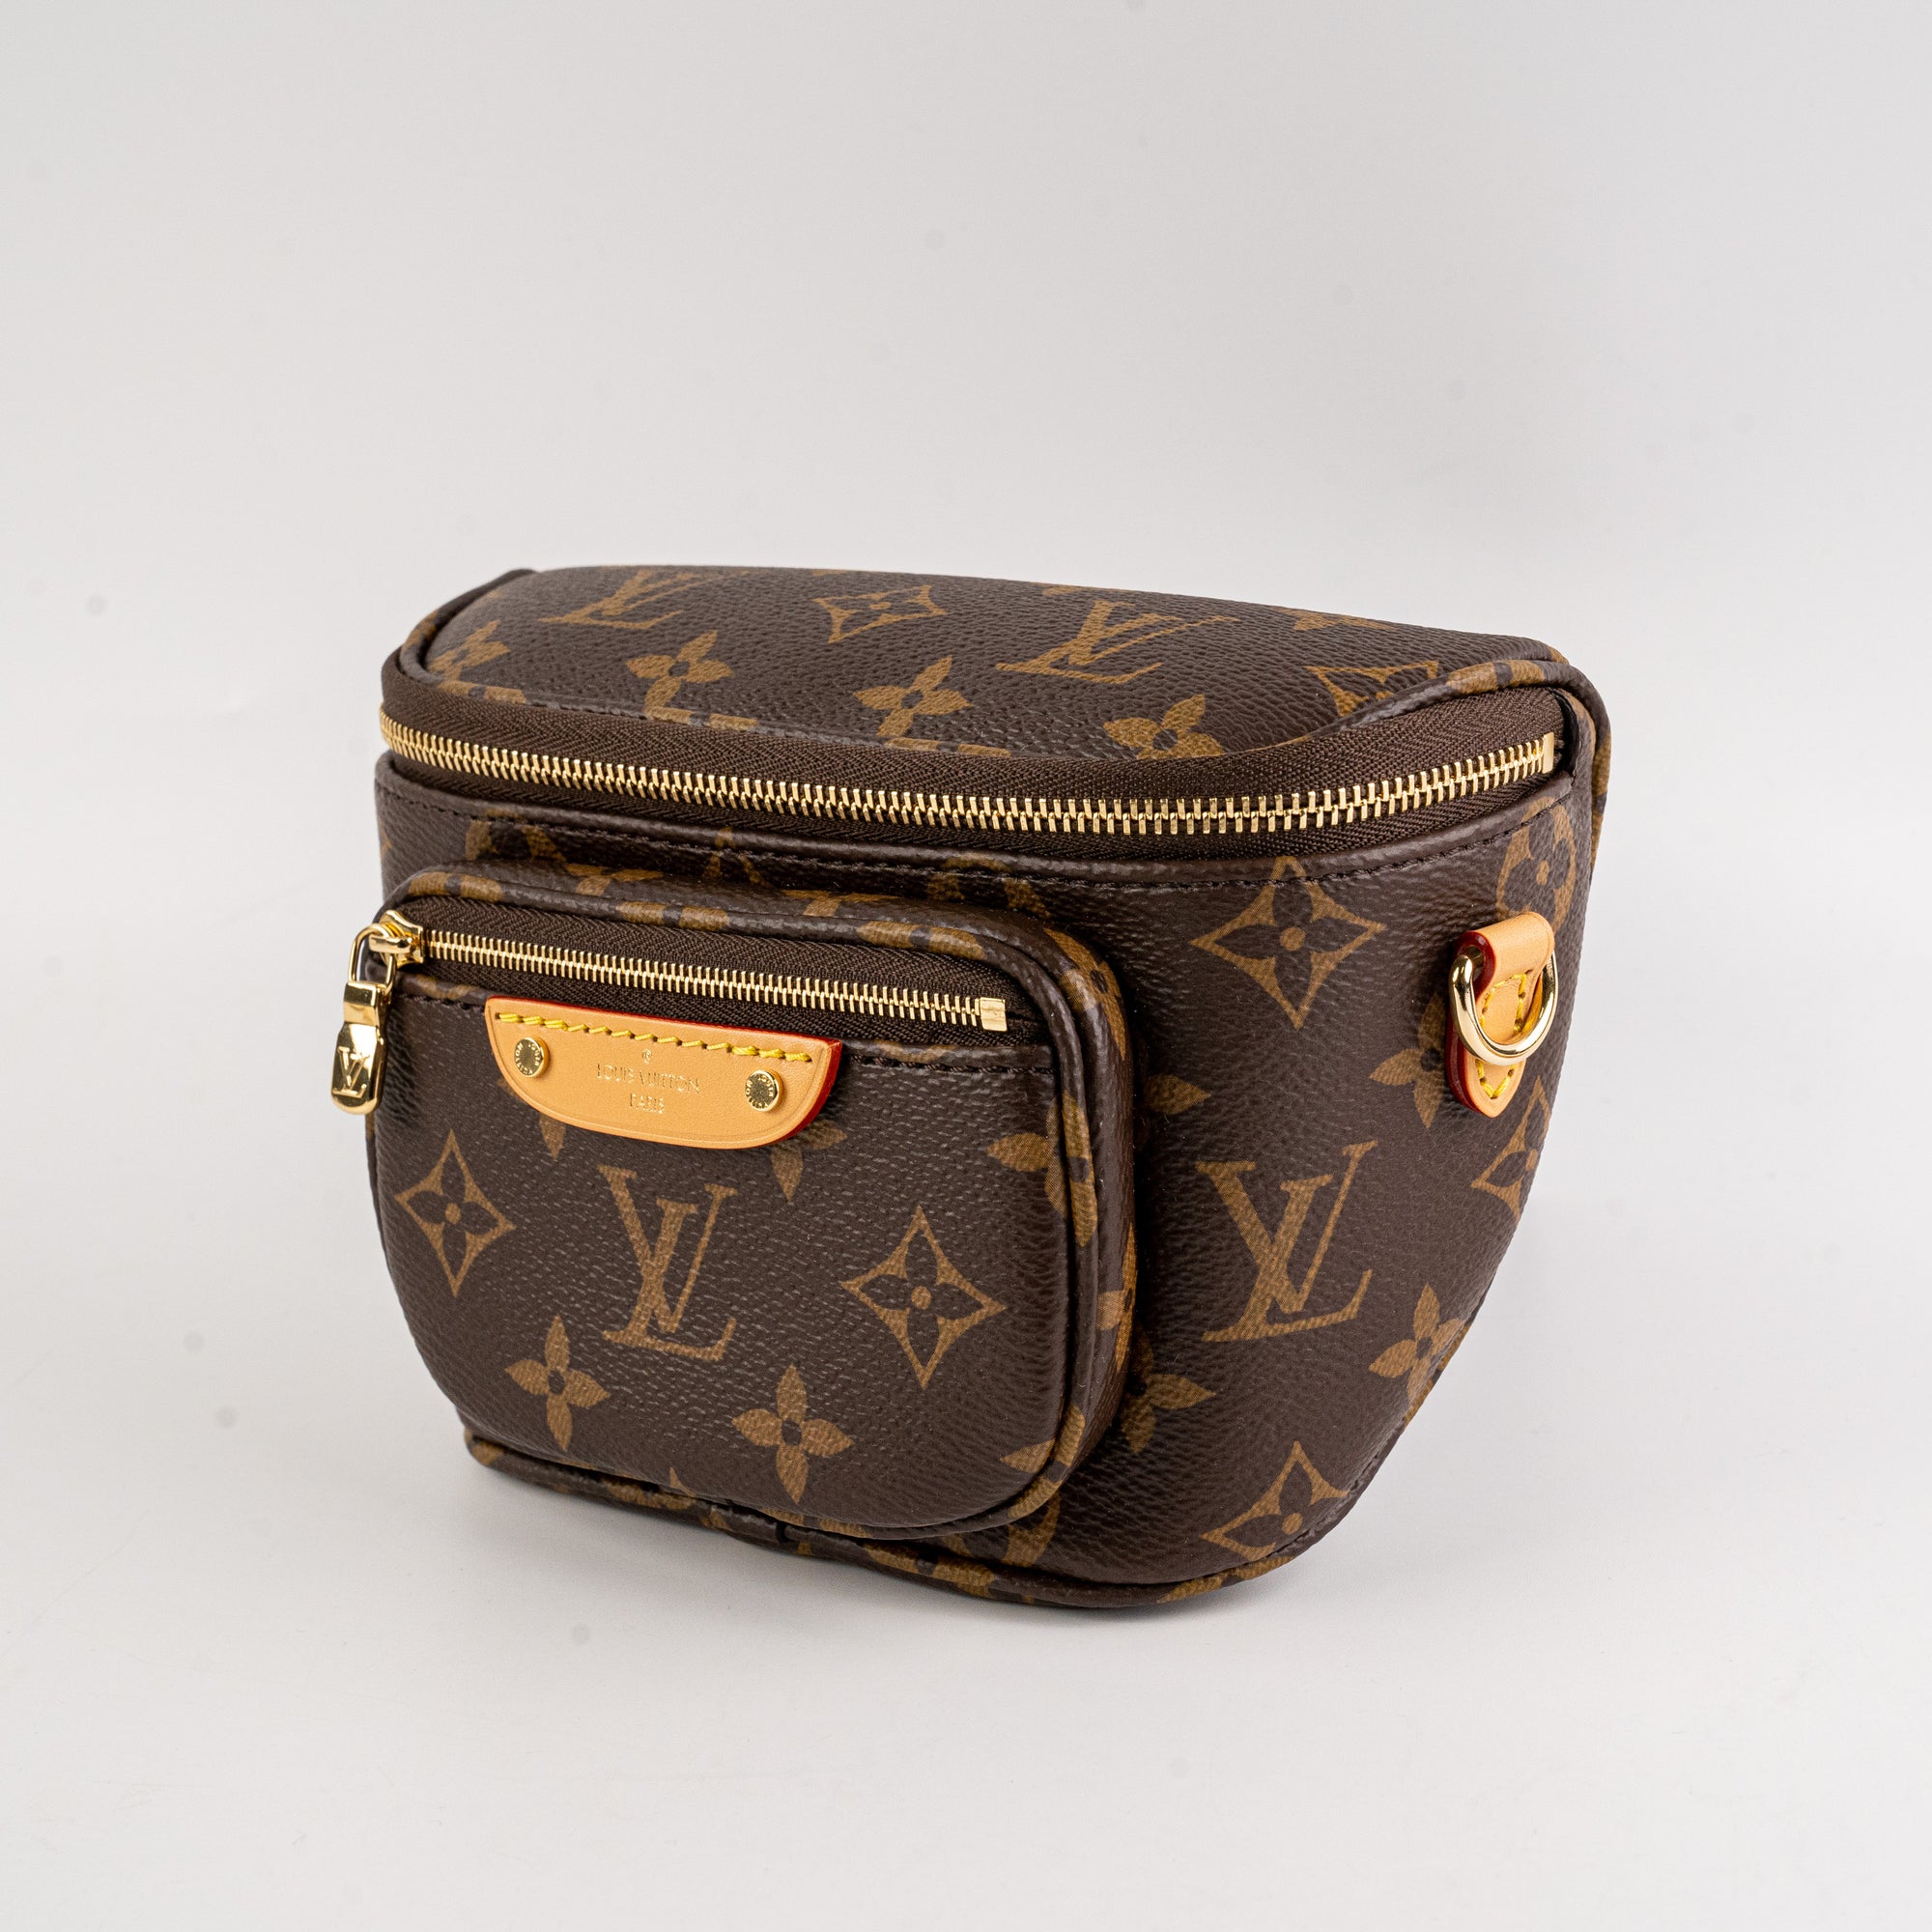 ITEM 11 - Louis Vuitton Mini Bumbag Belt Bag Monogram - THE PURSE AFFAIR